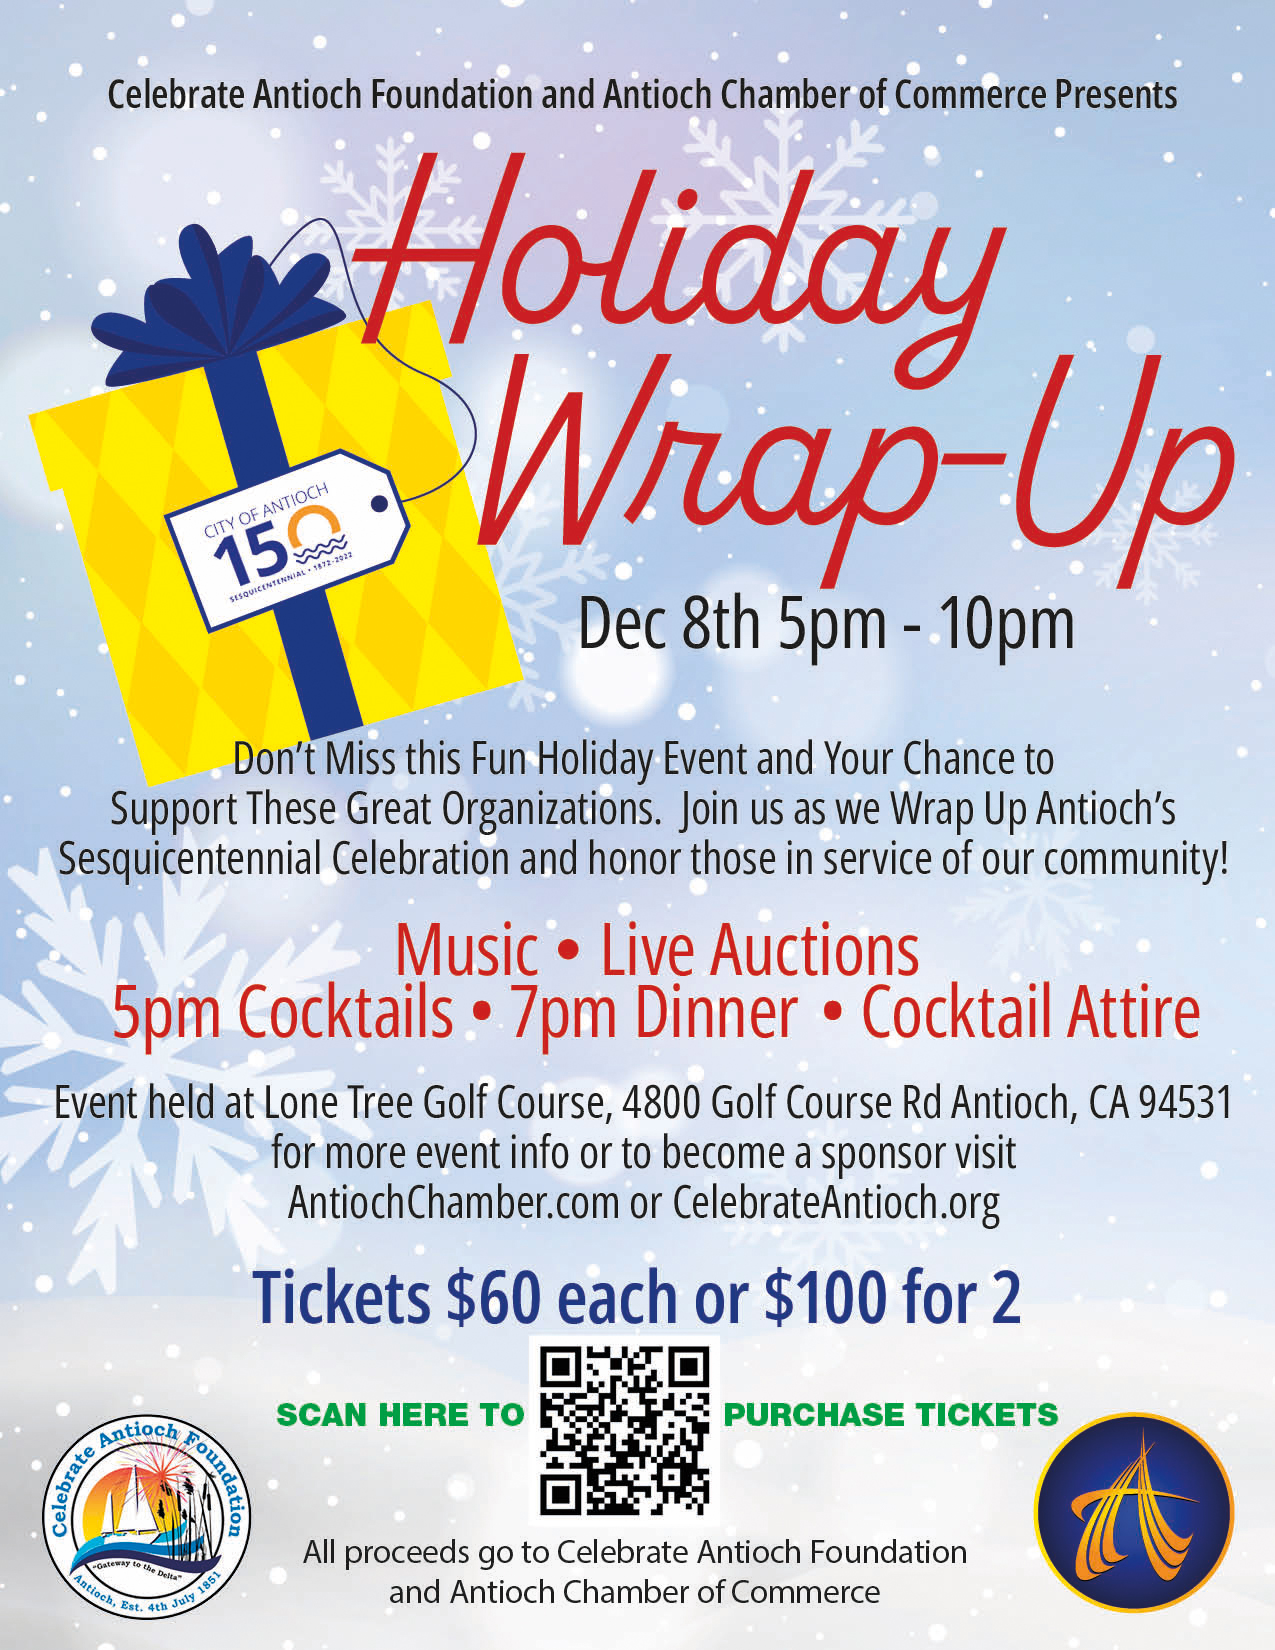 Pop up & Shop up @ Boca Center (Holiday Market) Tickets, Sat, Dec 9, 2023  at 12:00 PM